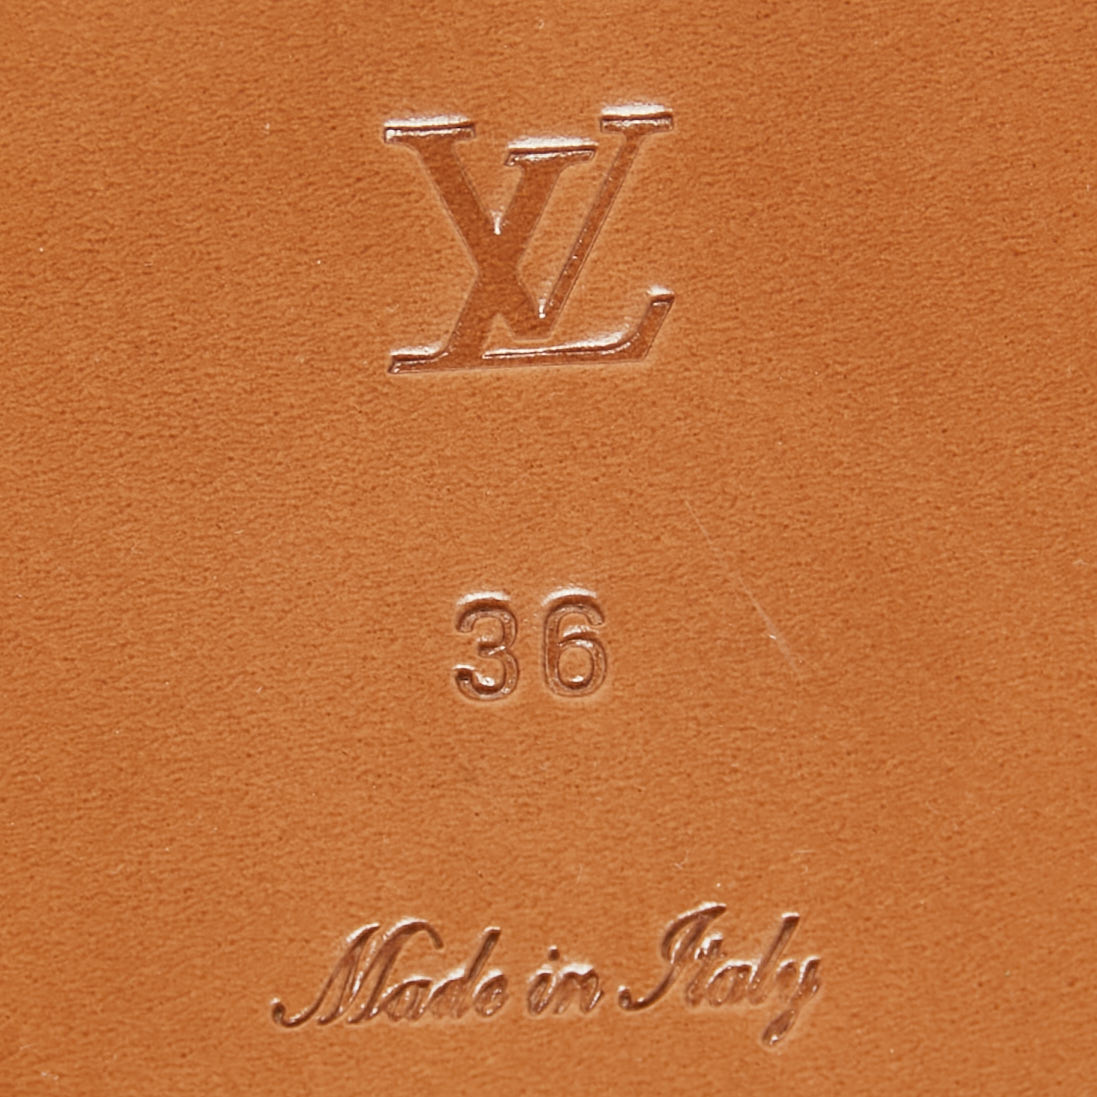 Louis Vuitton Tan Leather Lock It Flat Slides Size 36